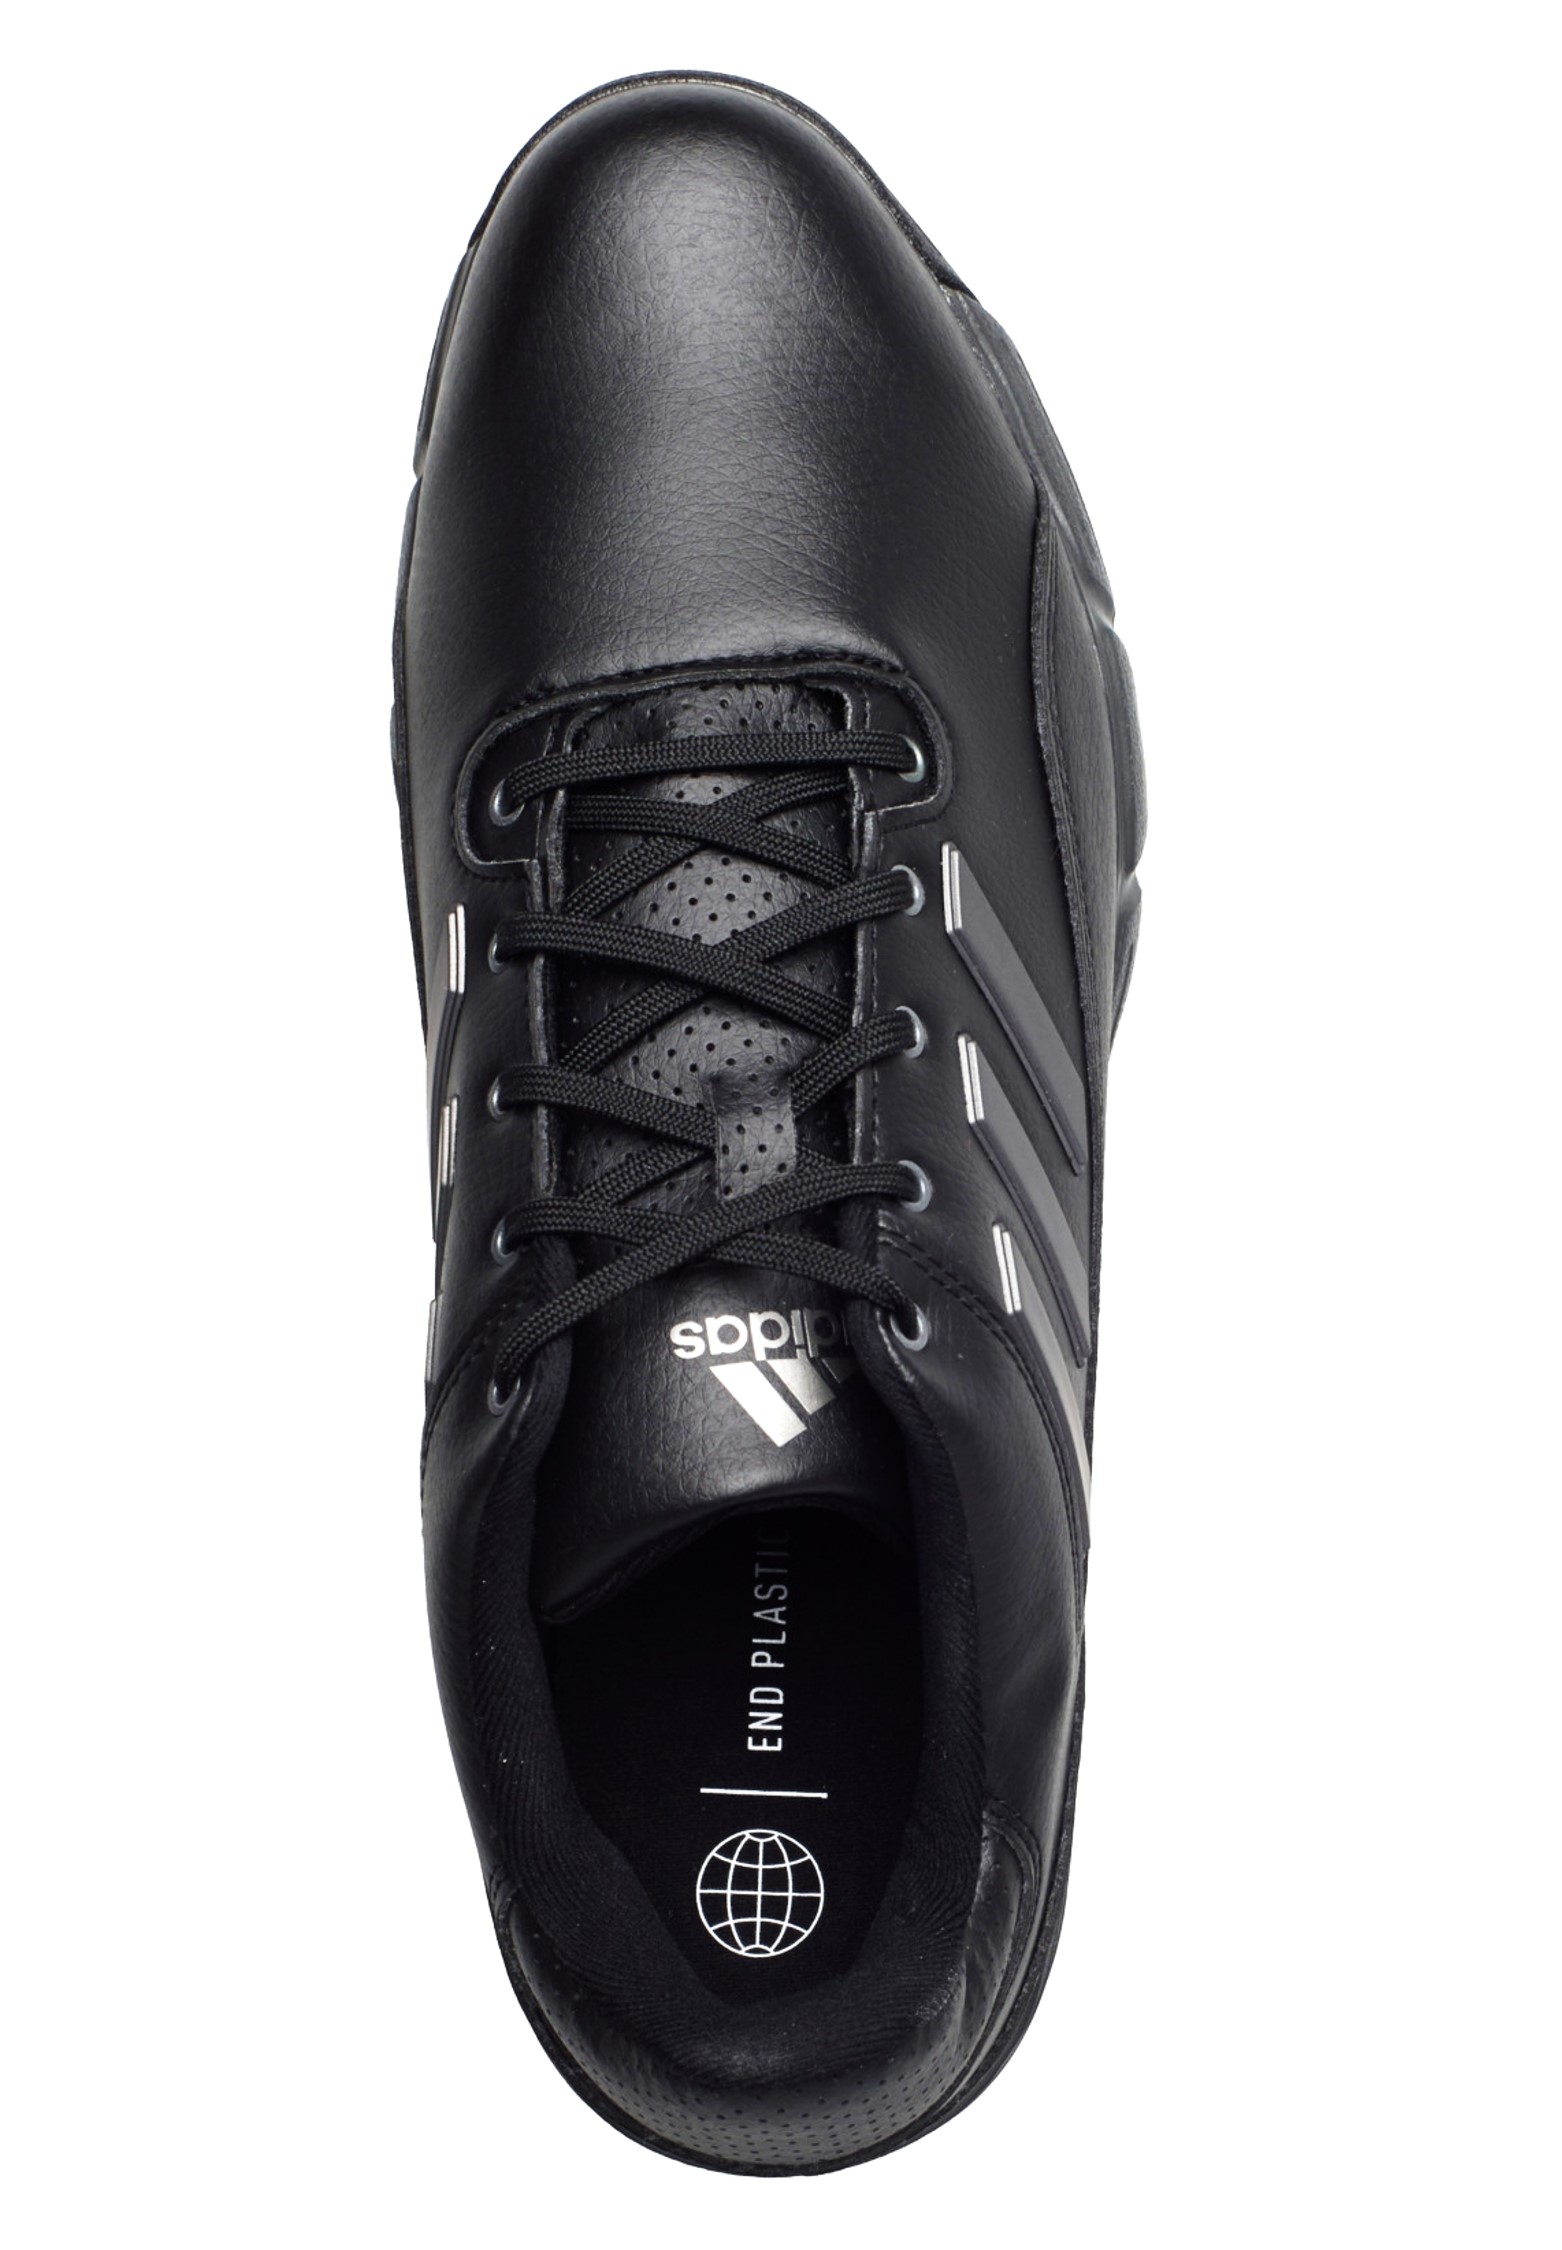 adidas Golflite Max Men's Black Shoes